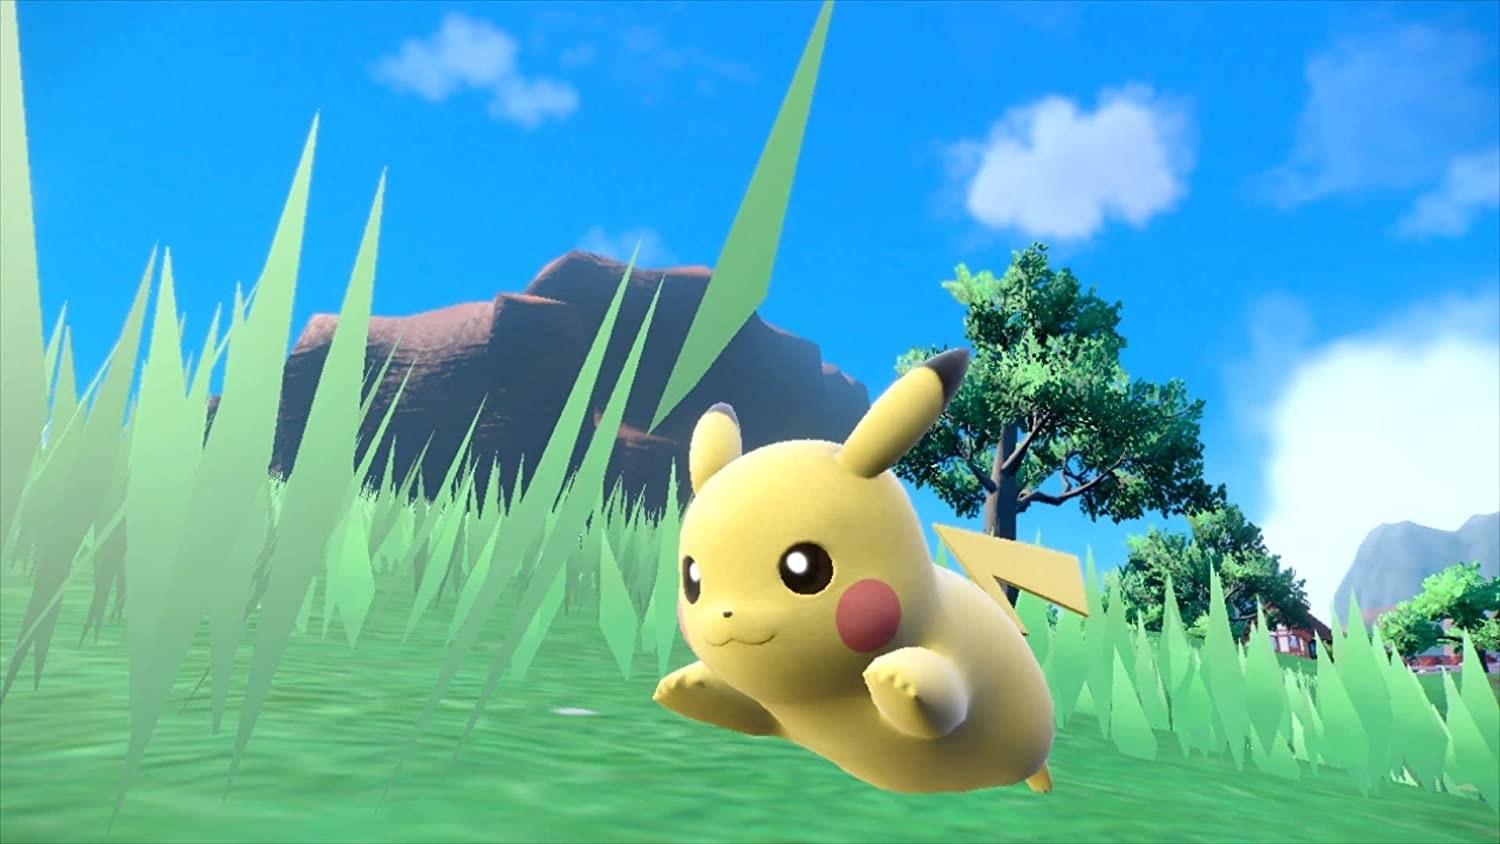 Pokemon running through grass